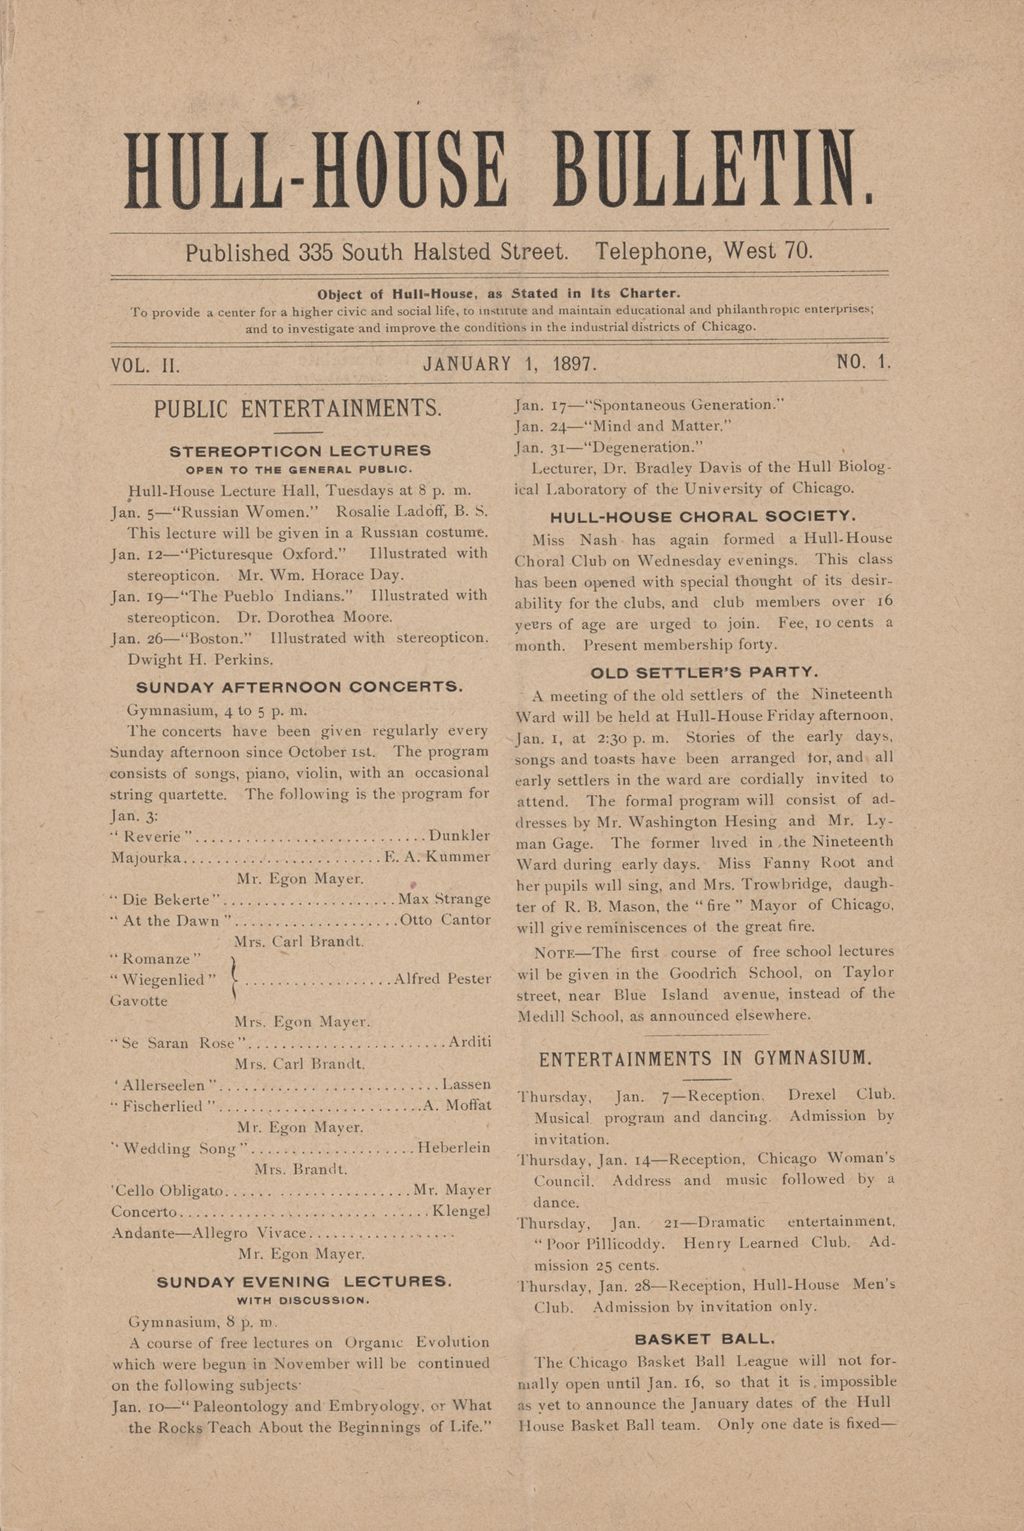 Hull-House Bulletin, vol. 2, no. 1, 1897: Jan. 1